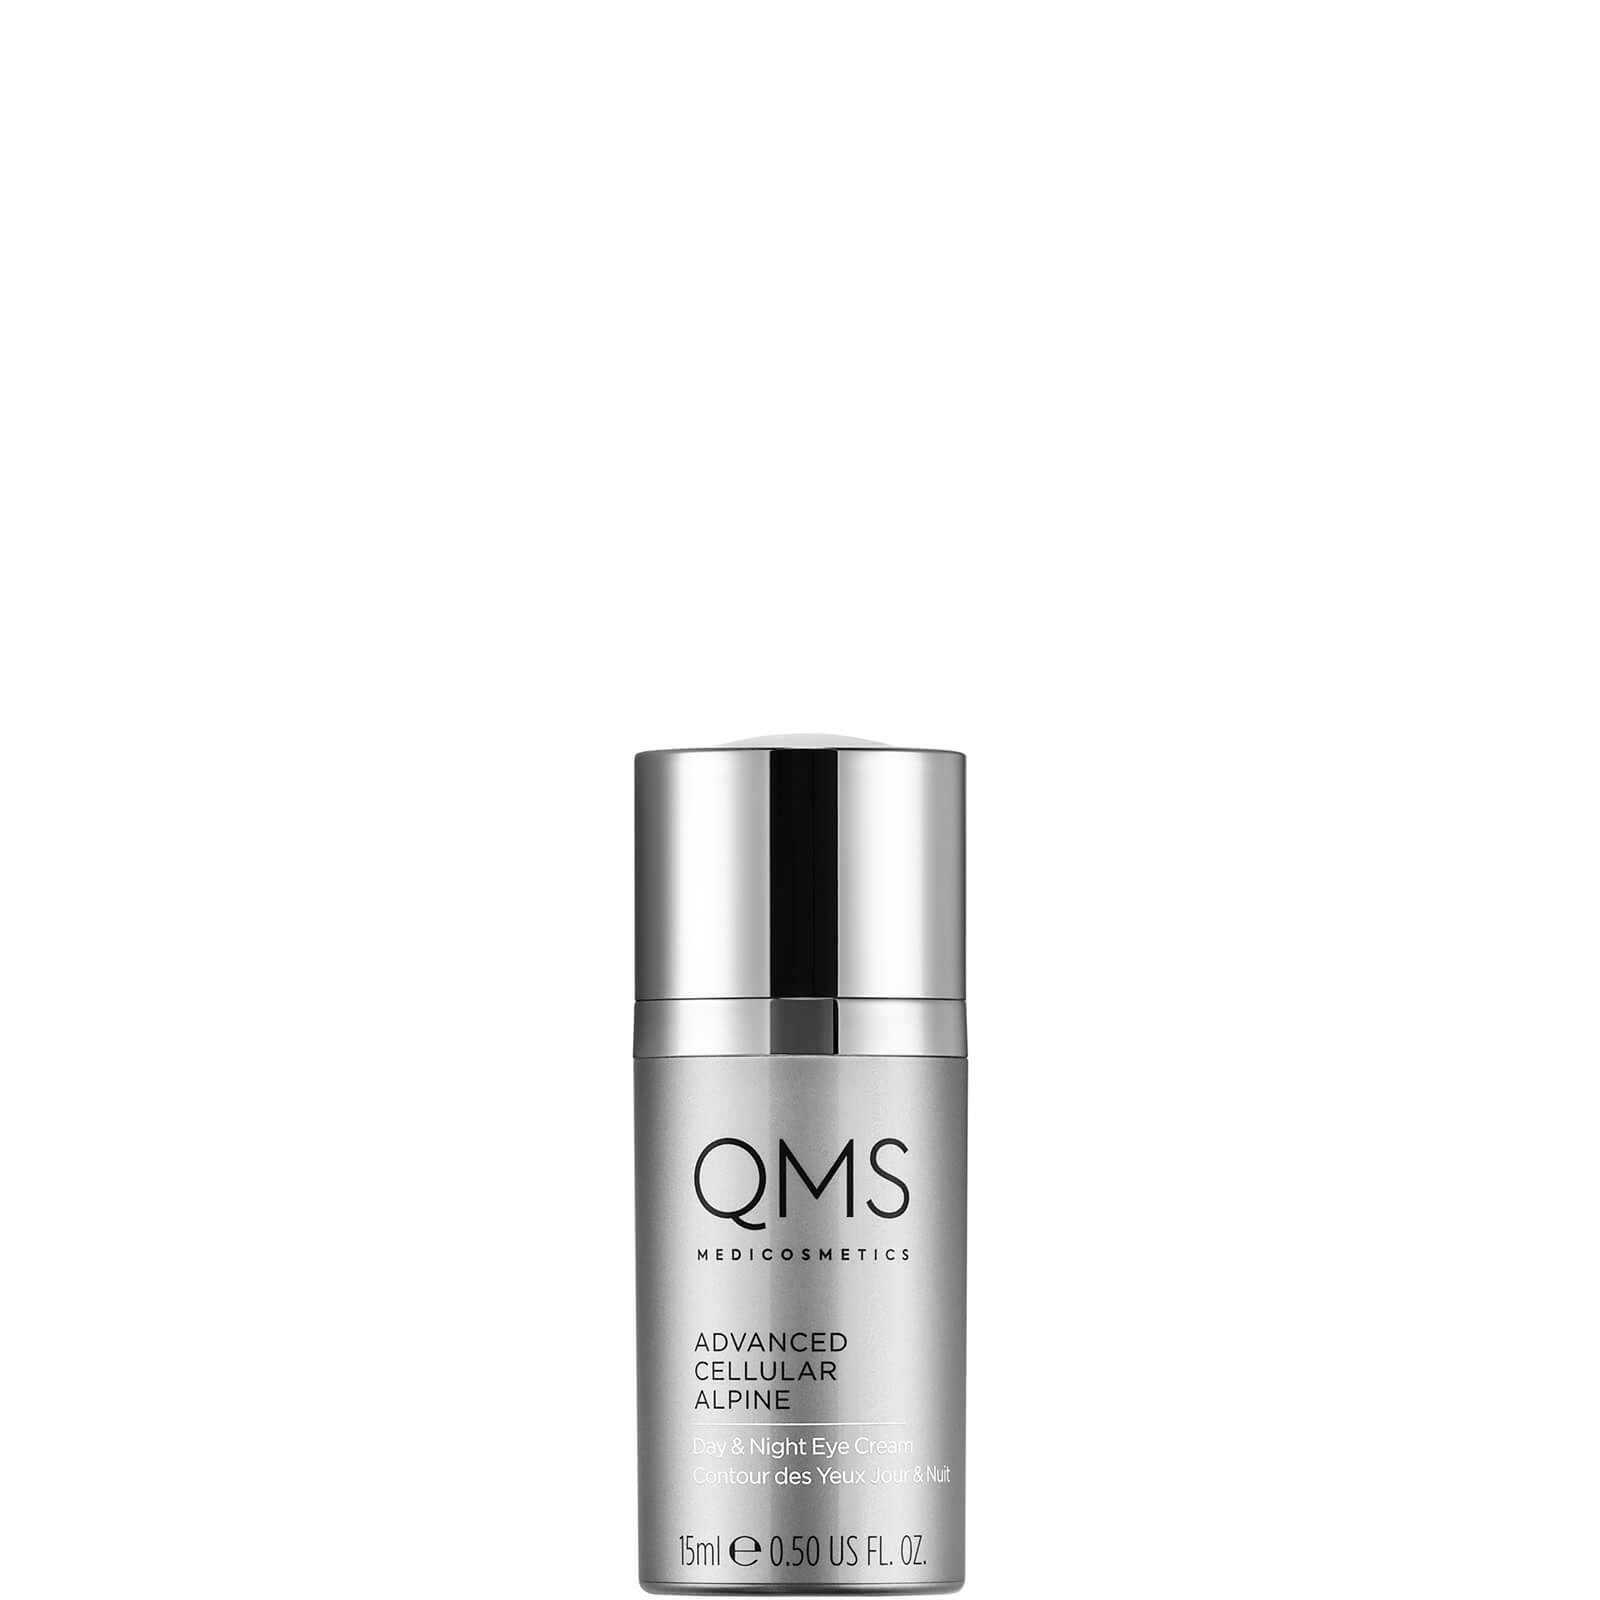 Image of QMS Medicosmetics Advanced Cellular Alpine Day & Night Eye Cream 15ml